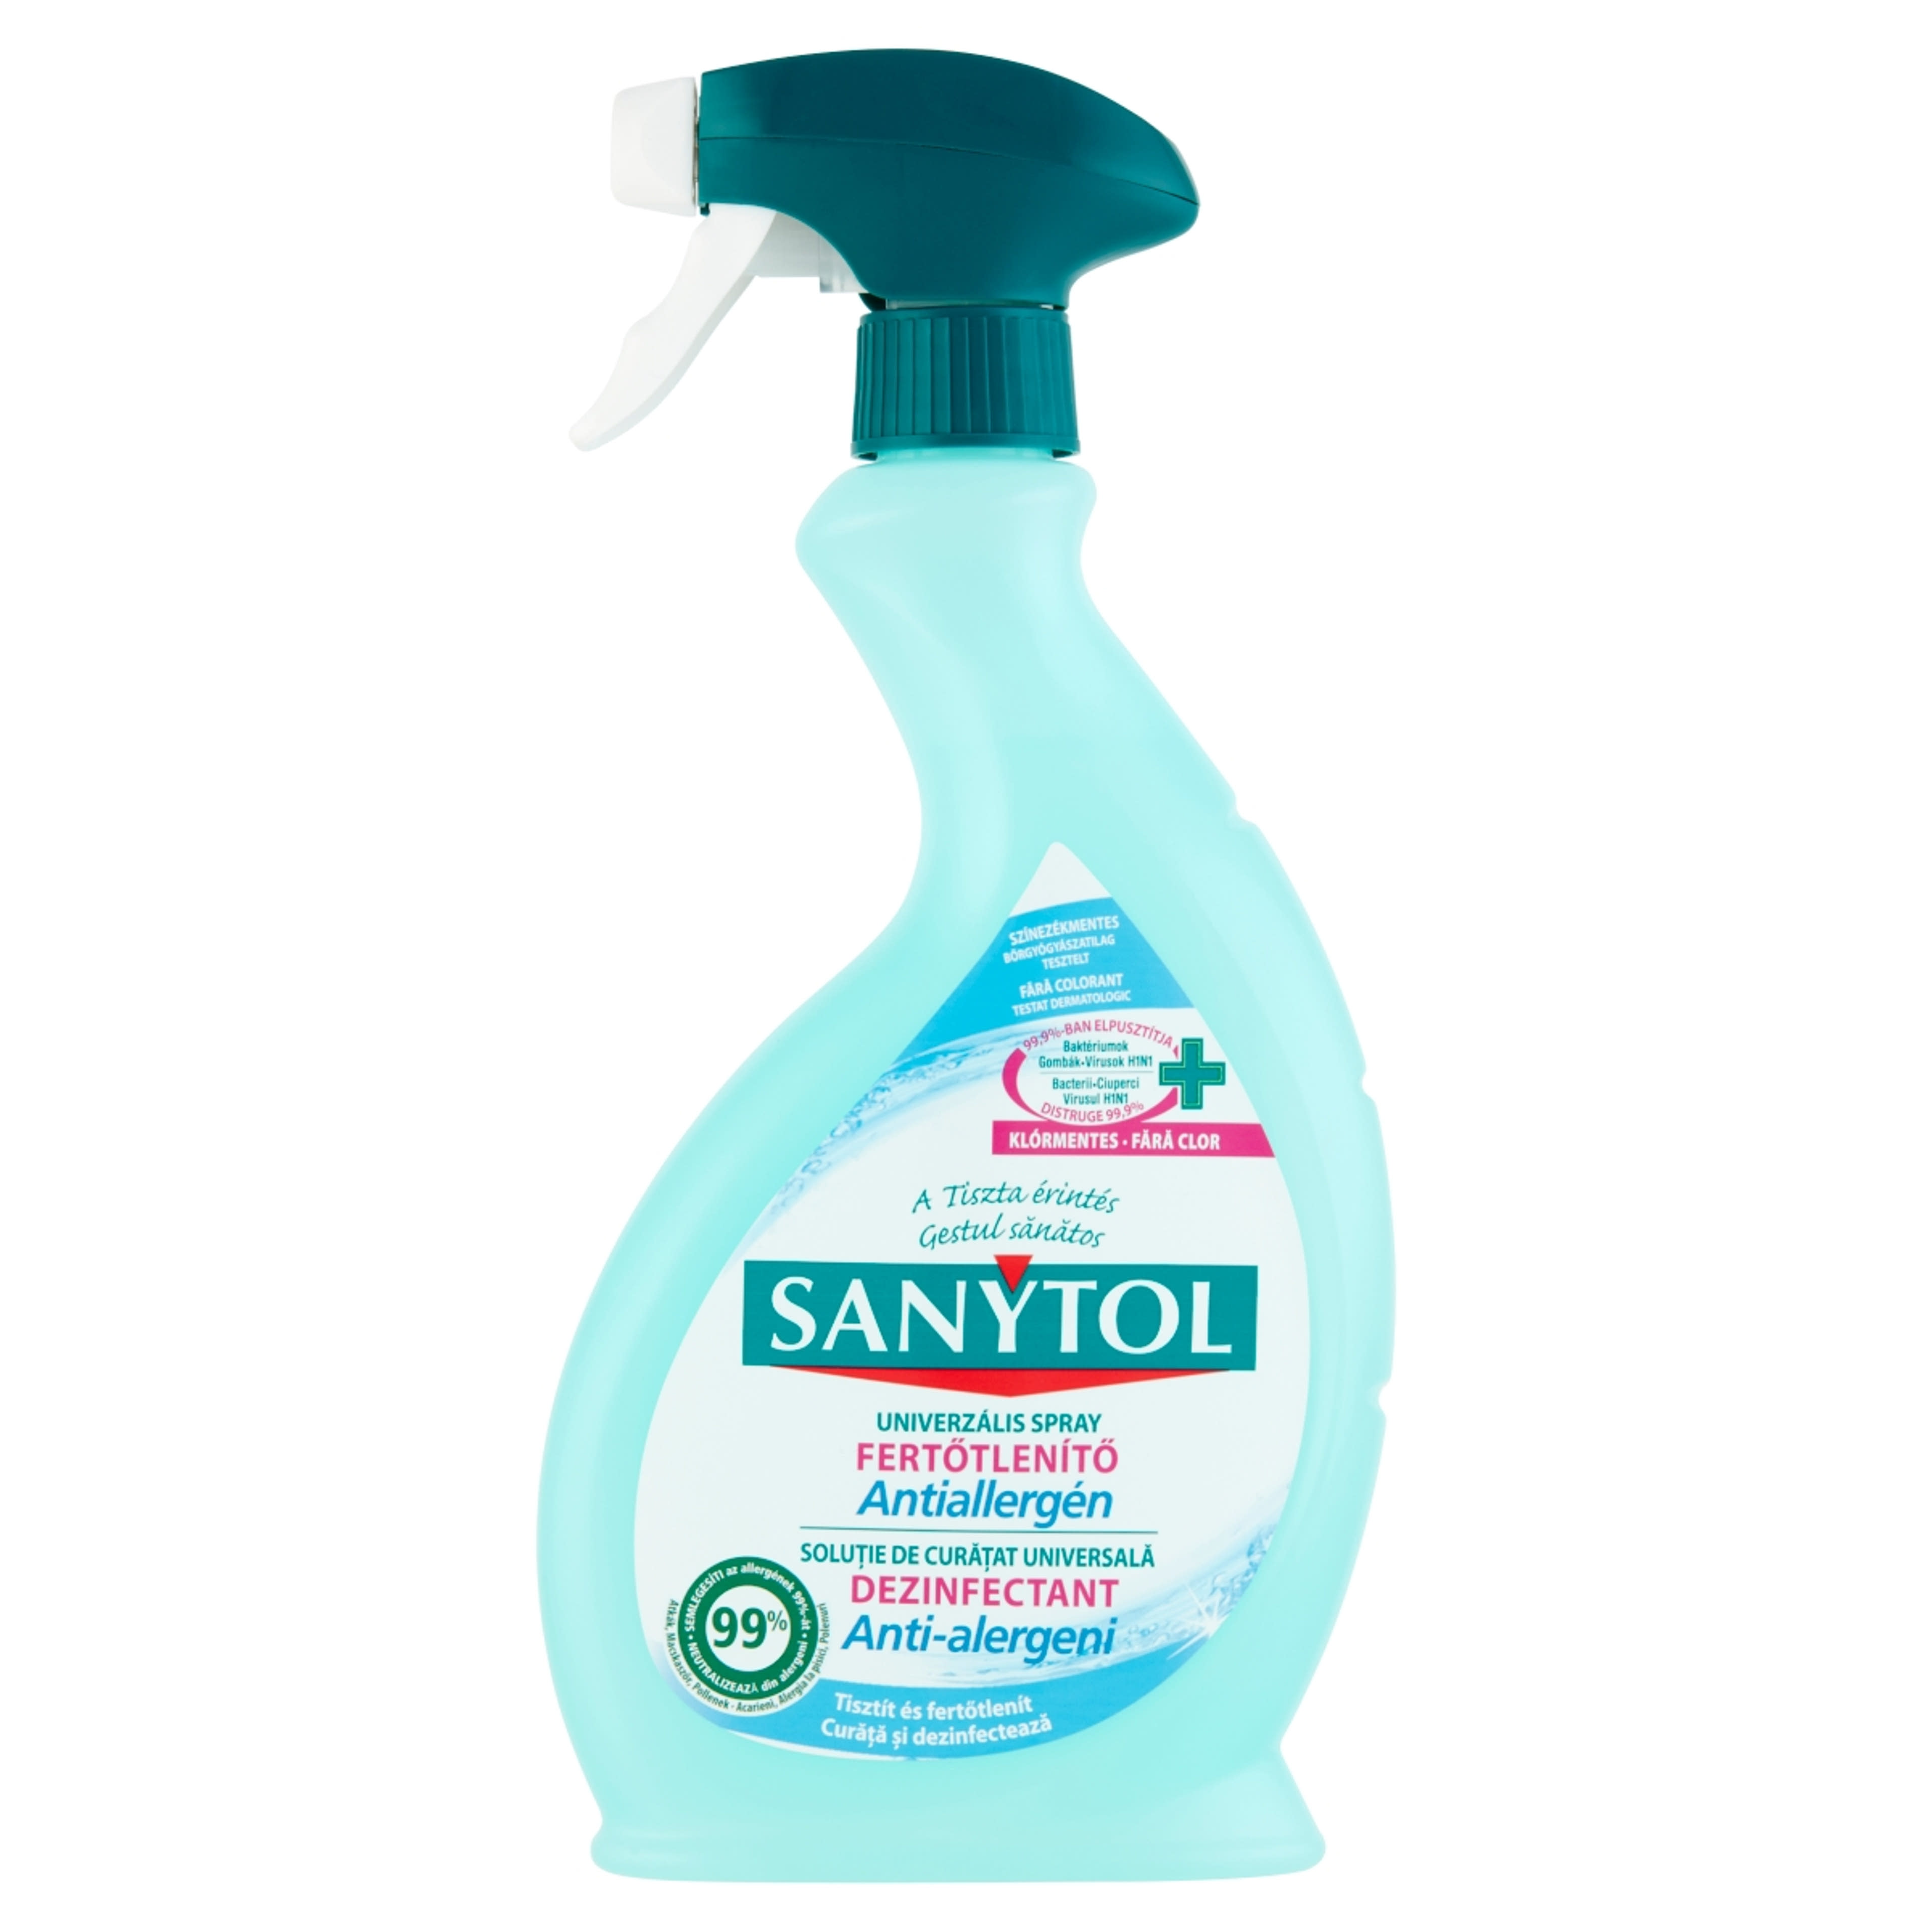 Sanytol Fertotleníto Antiallergén Universal Spray - 500 ml